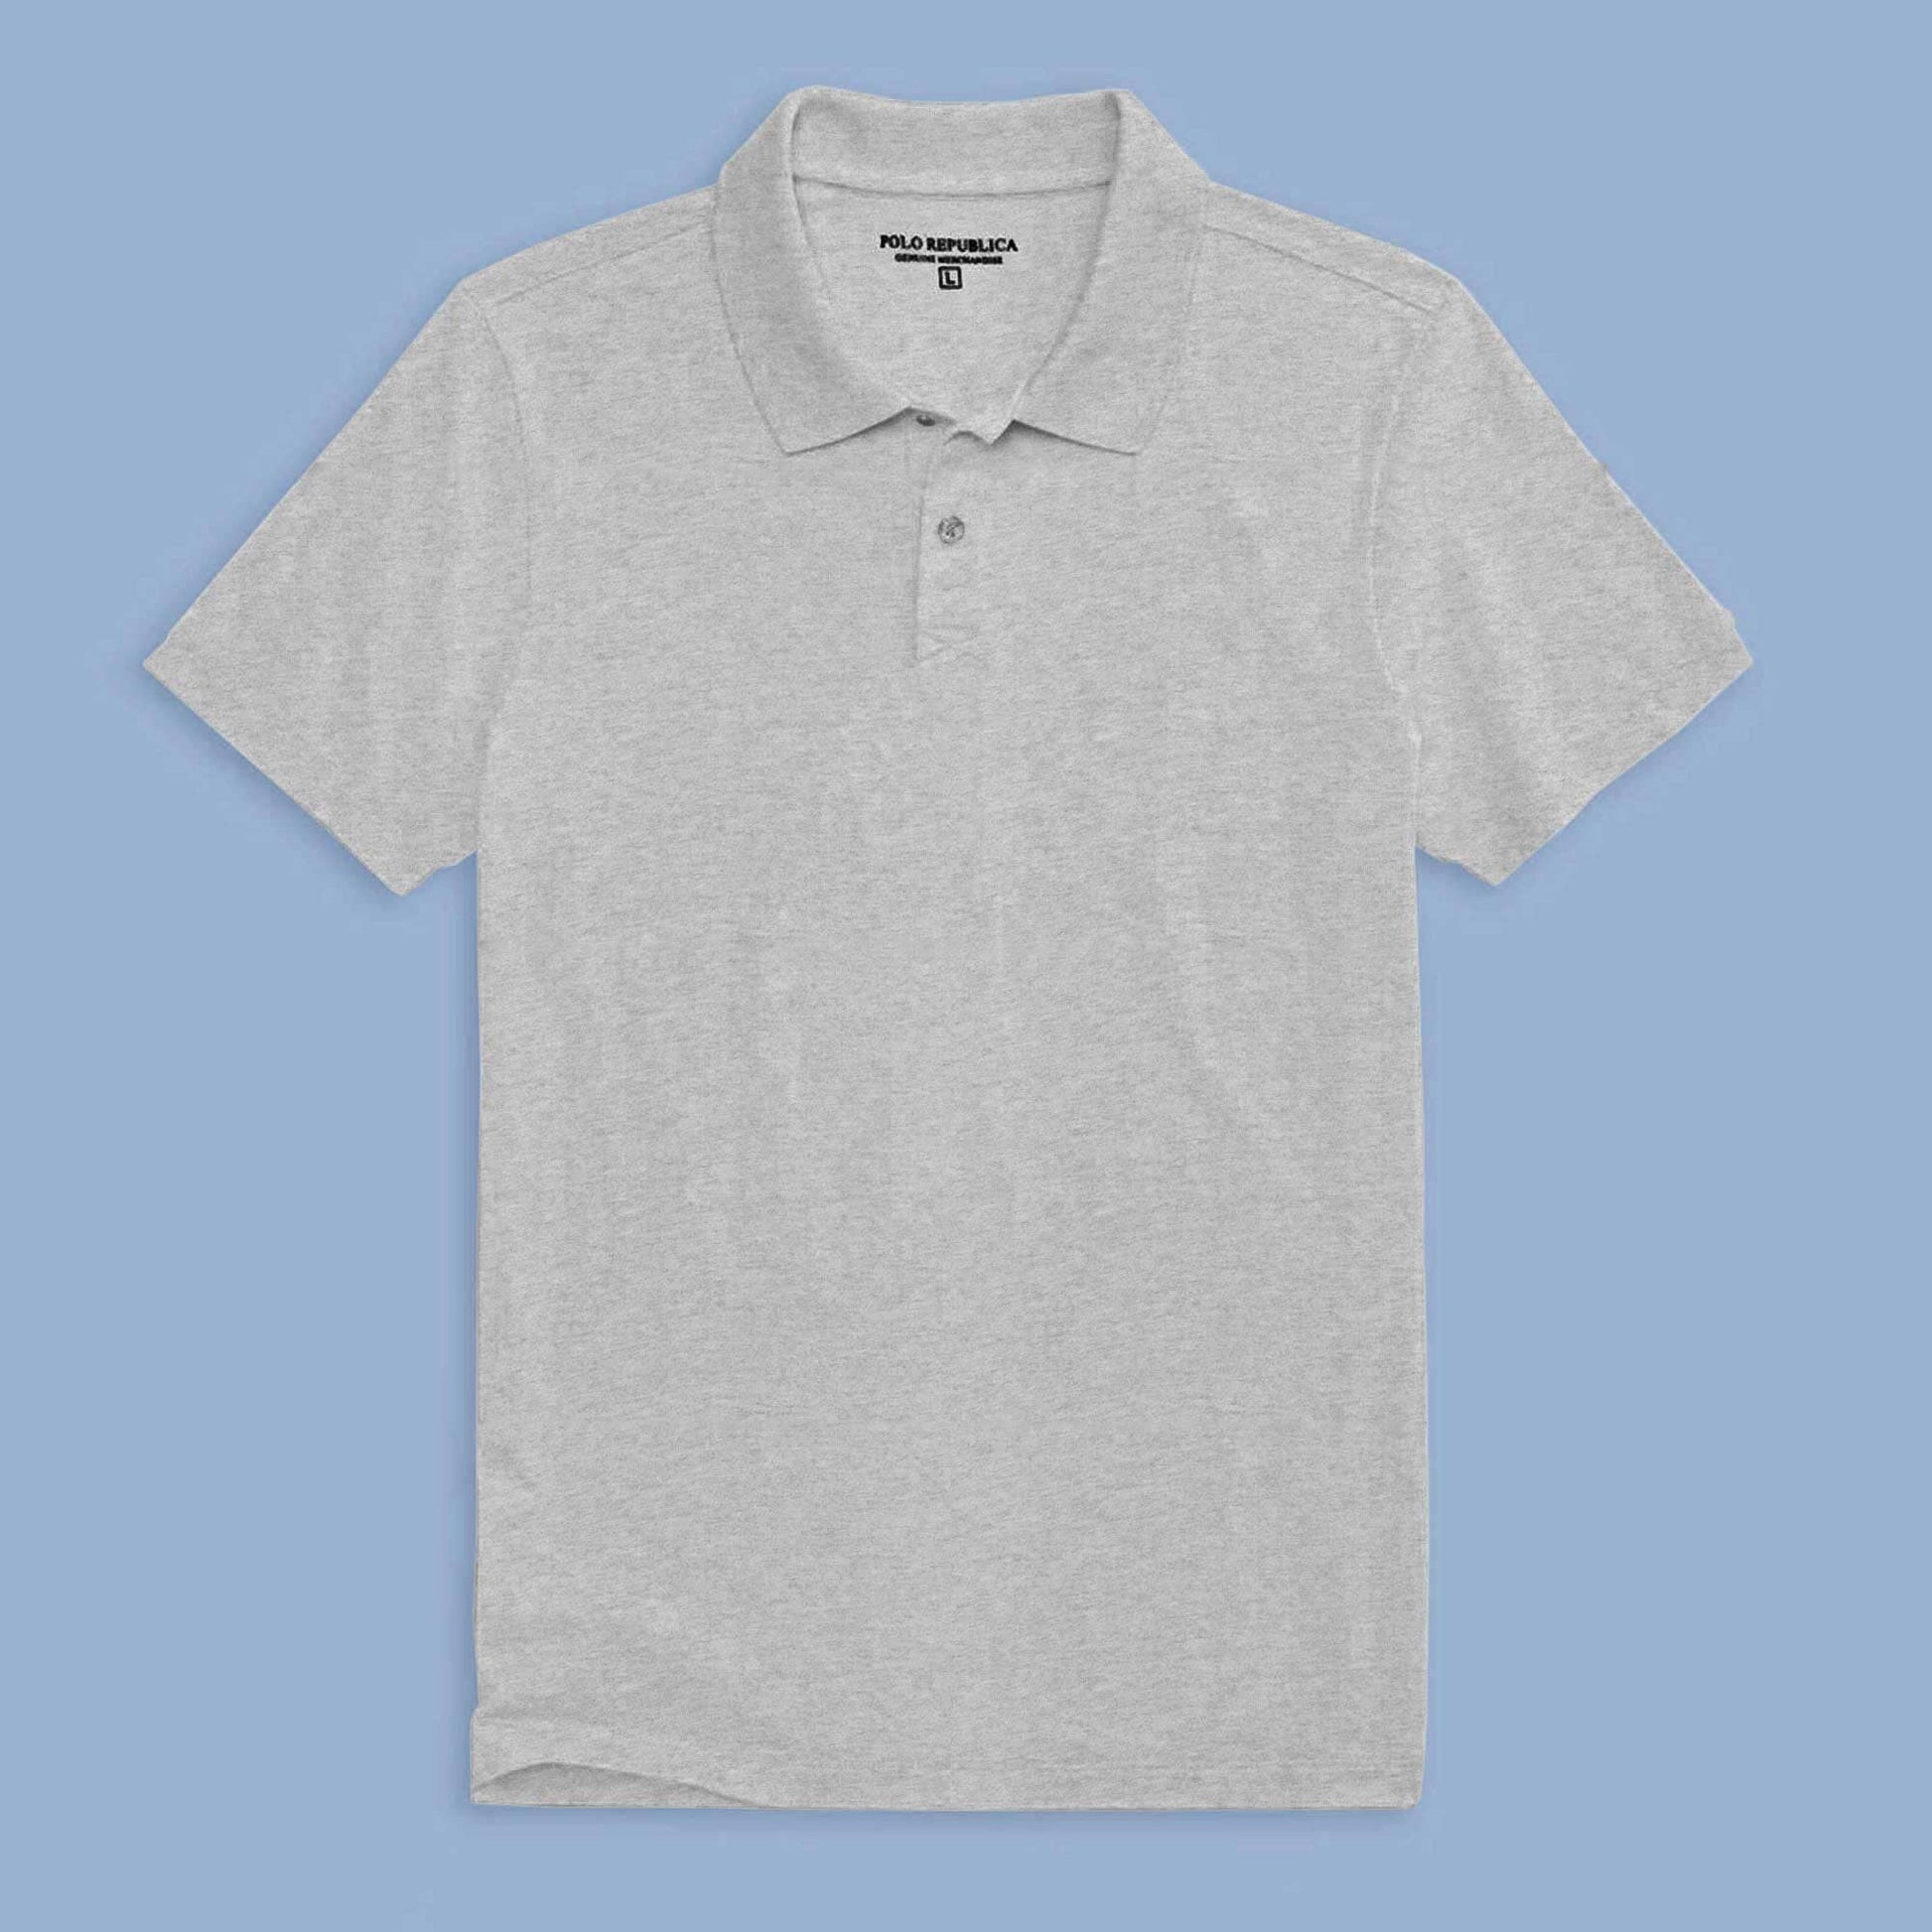 Polo Republica Men's Essentials Short Sleeve Polo Shirt Men's Polo Shirt Polo Republica Melange Grey S 